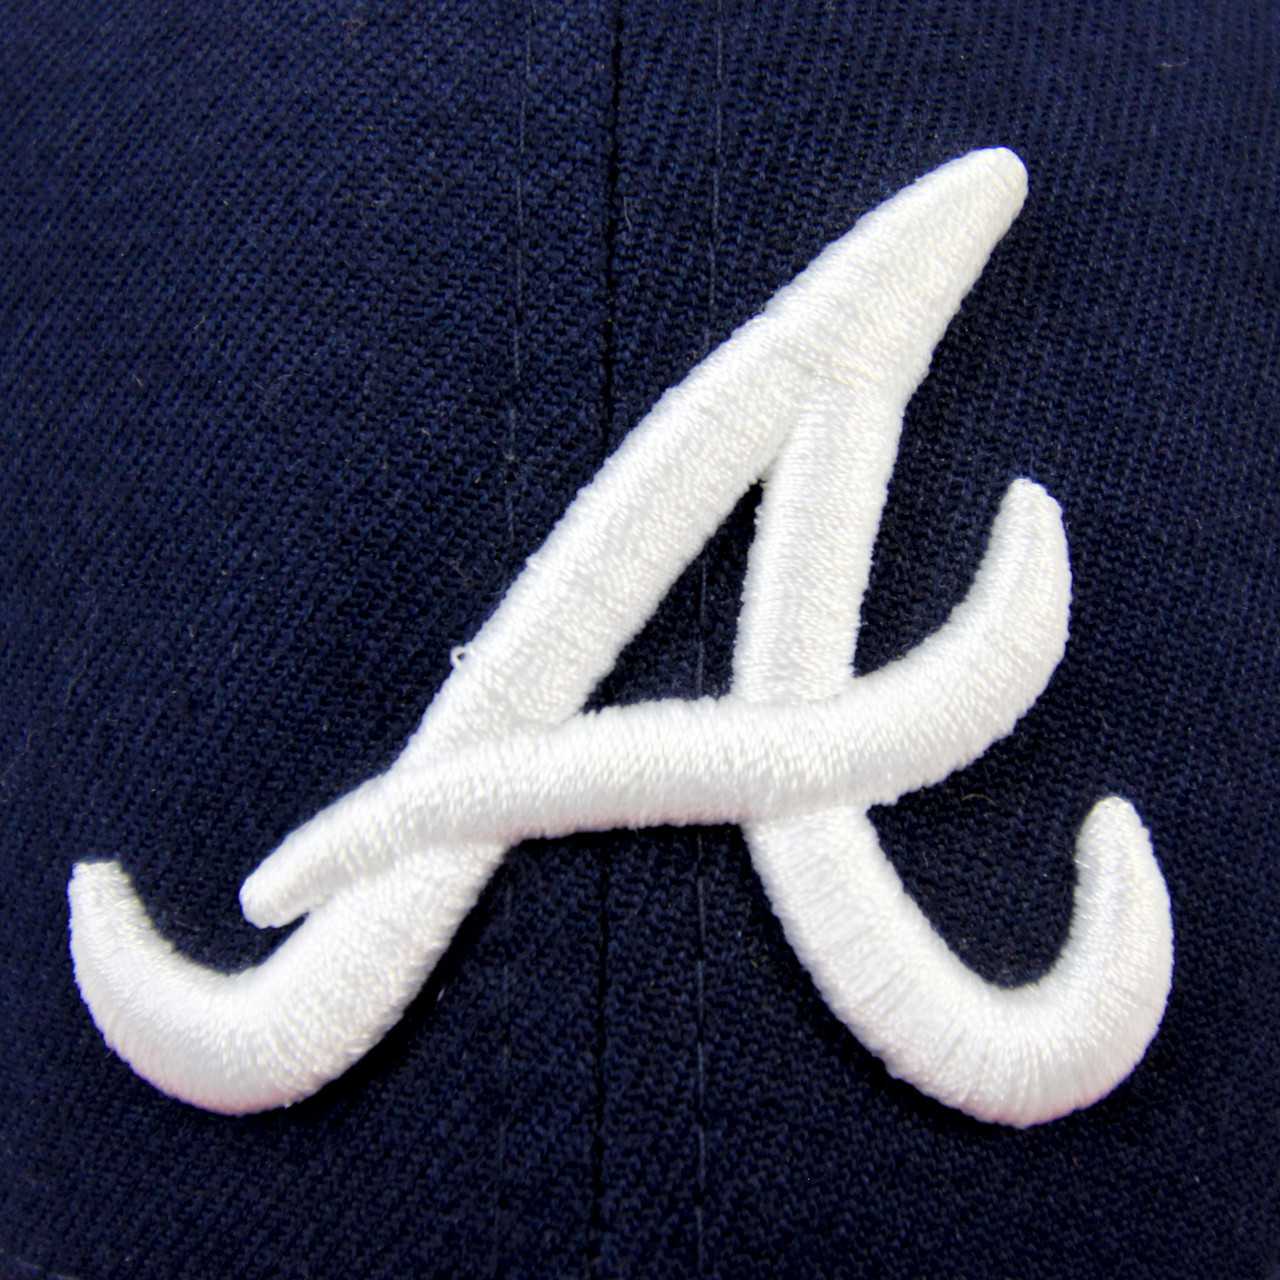 Atlanta Braves Apparel  Clothing and Gear for Atlanta Braves Fans